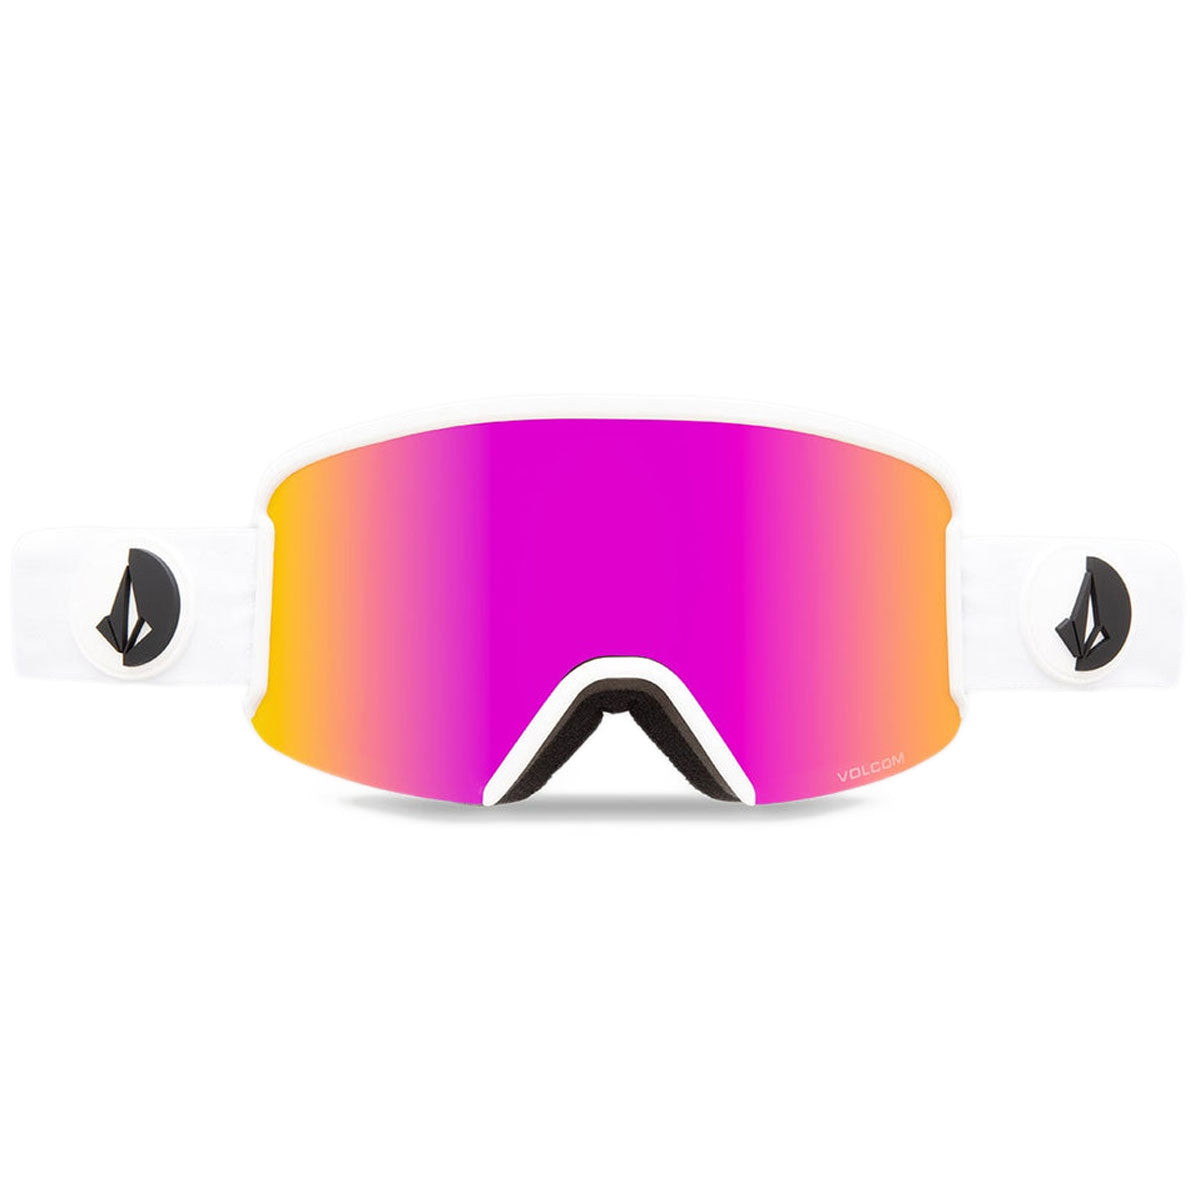 Volcom Garden Snowboard Goggles - Matte White/Pink Chrome image 1